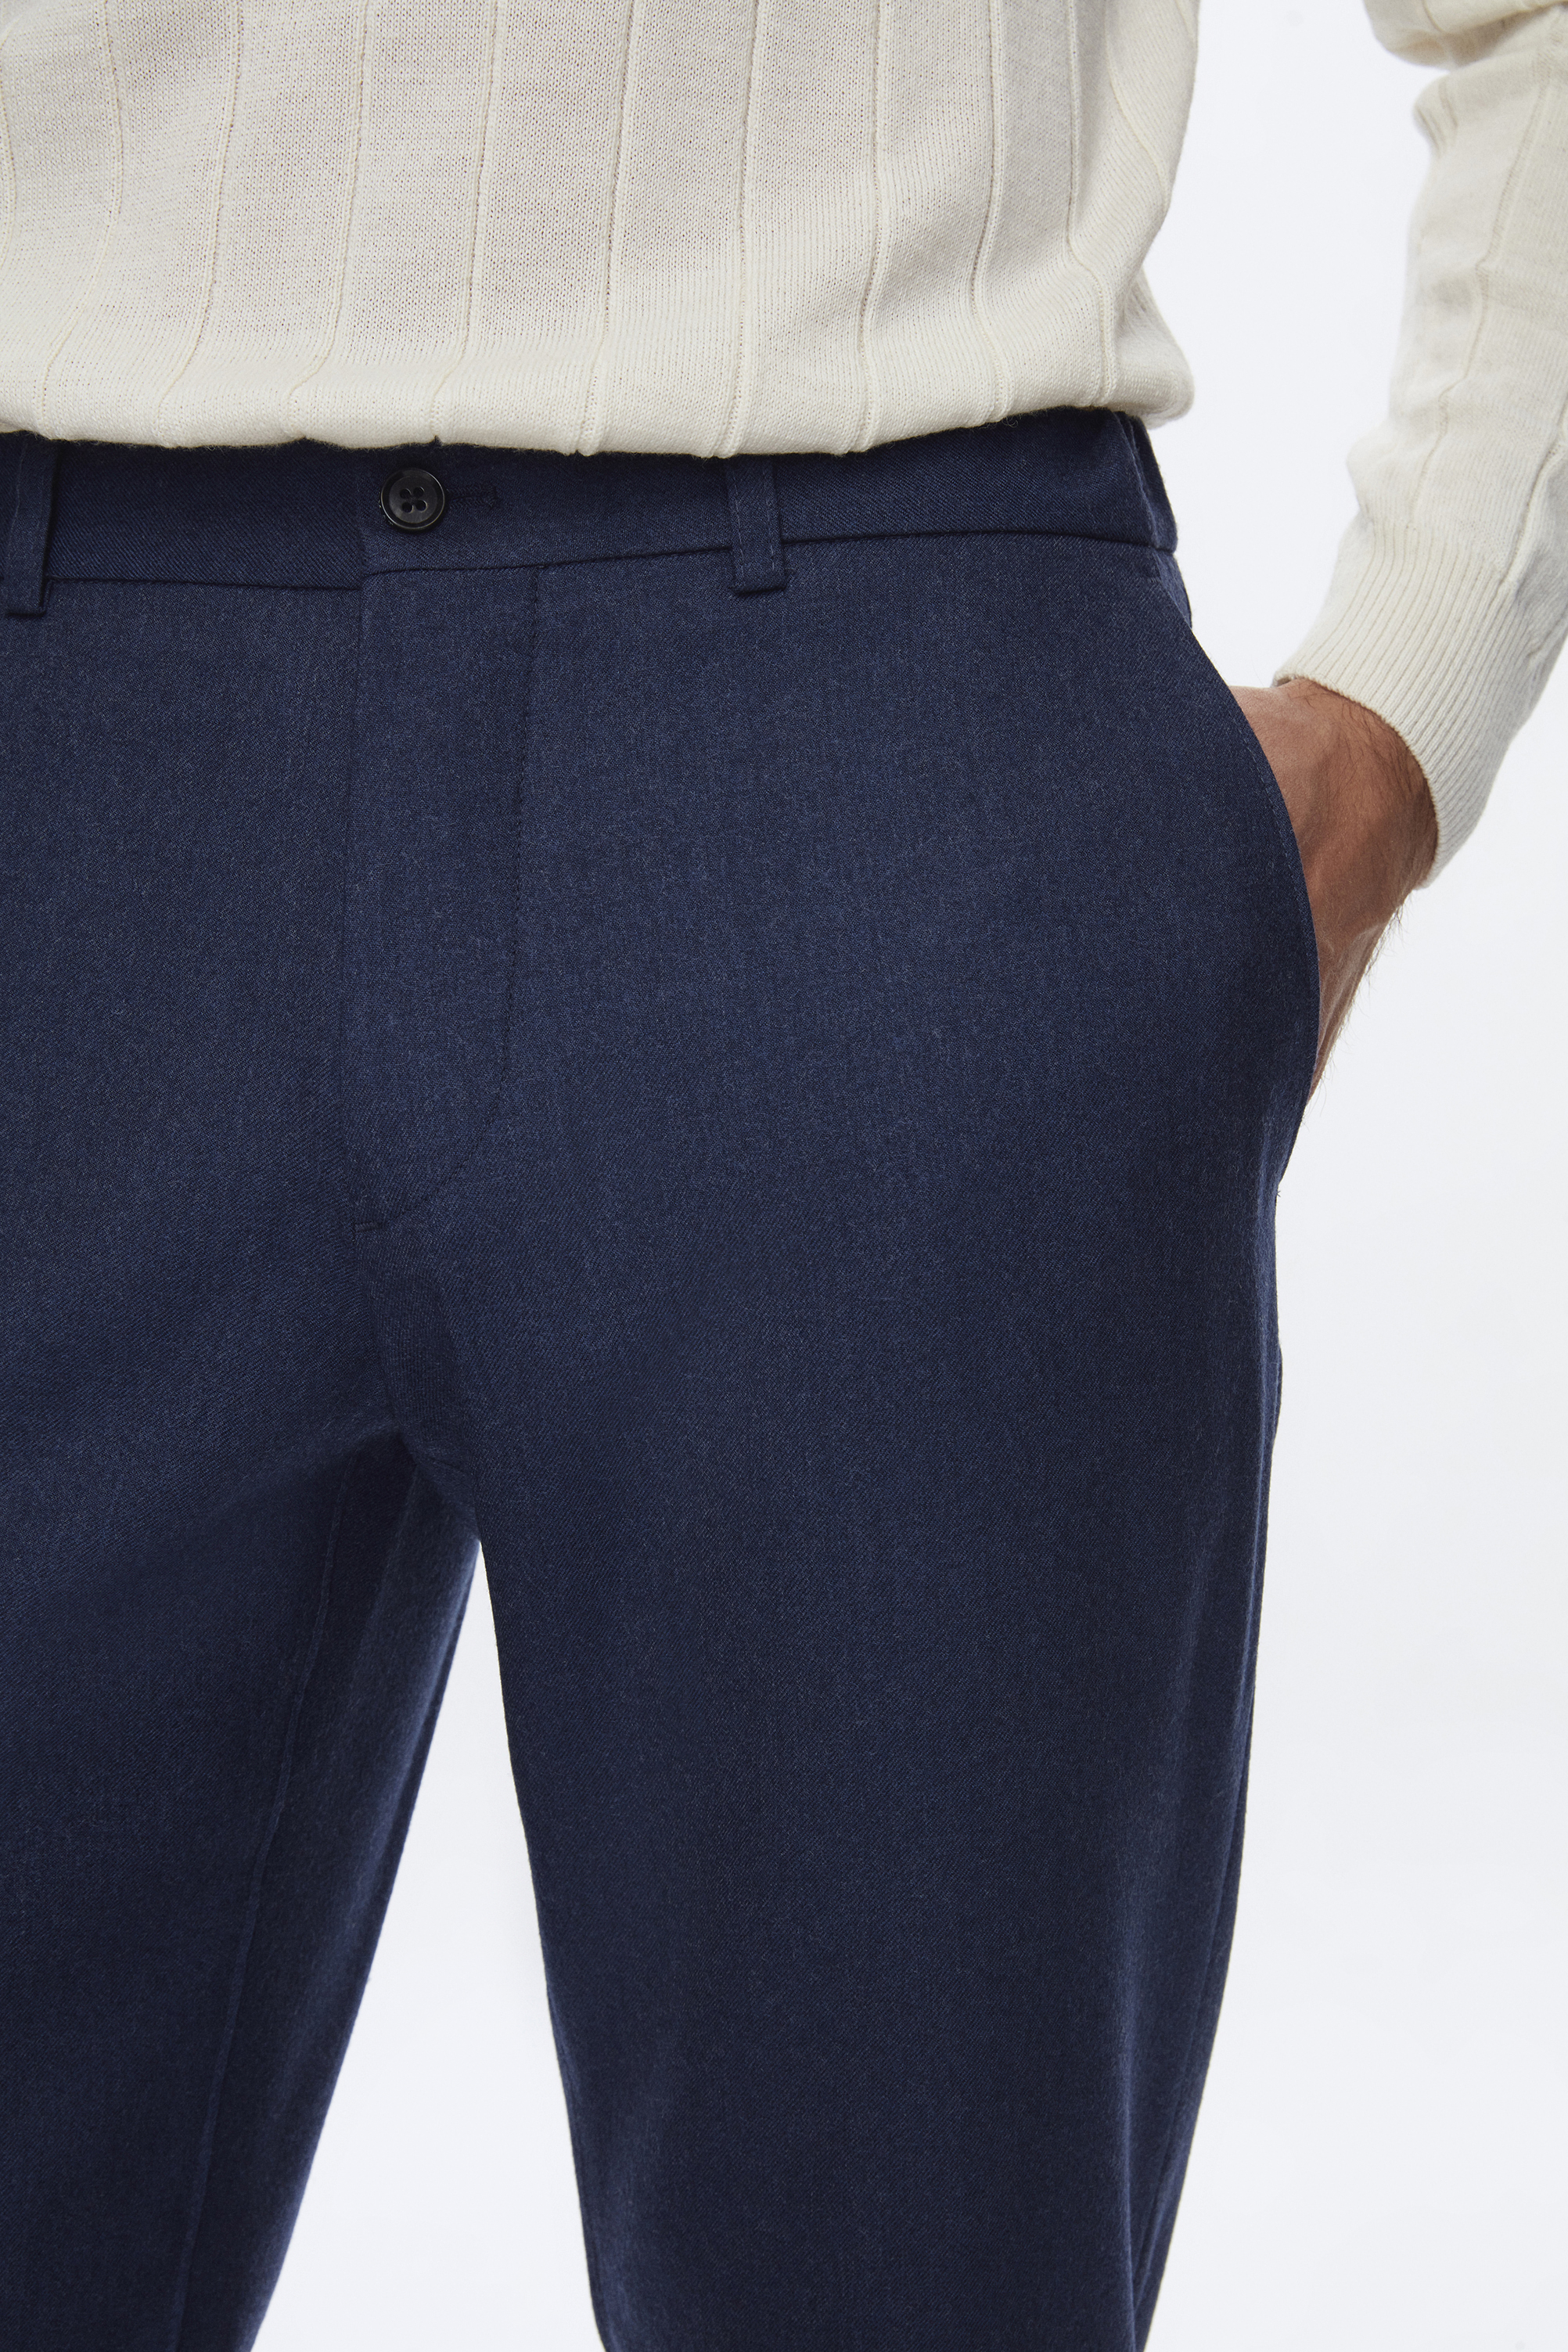 Damat Tween Damat Slim Fit Lacivert Düz %100 Yün Chino Pantolon. 2